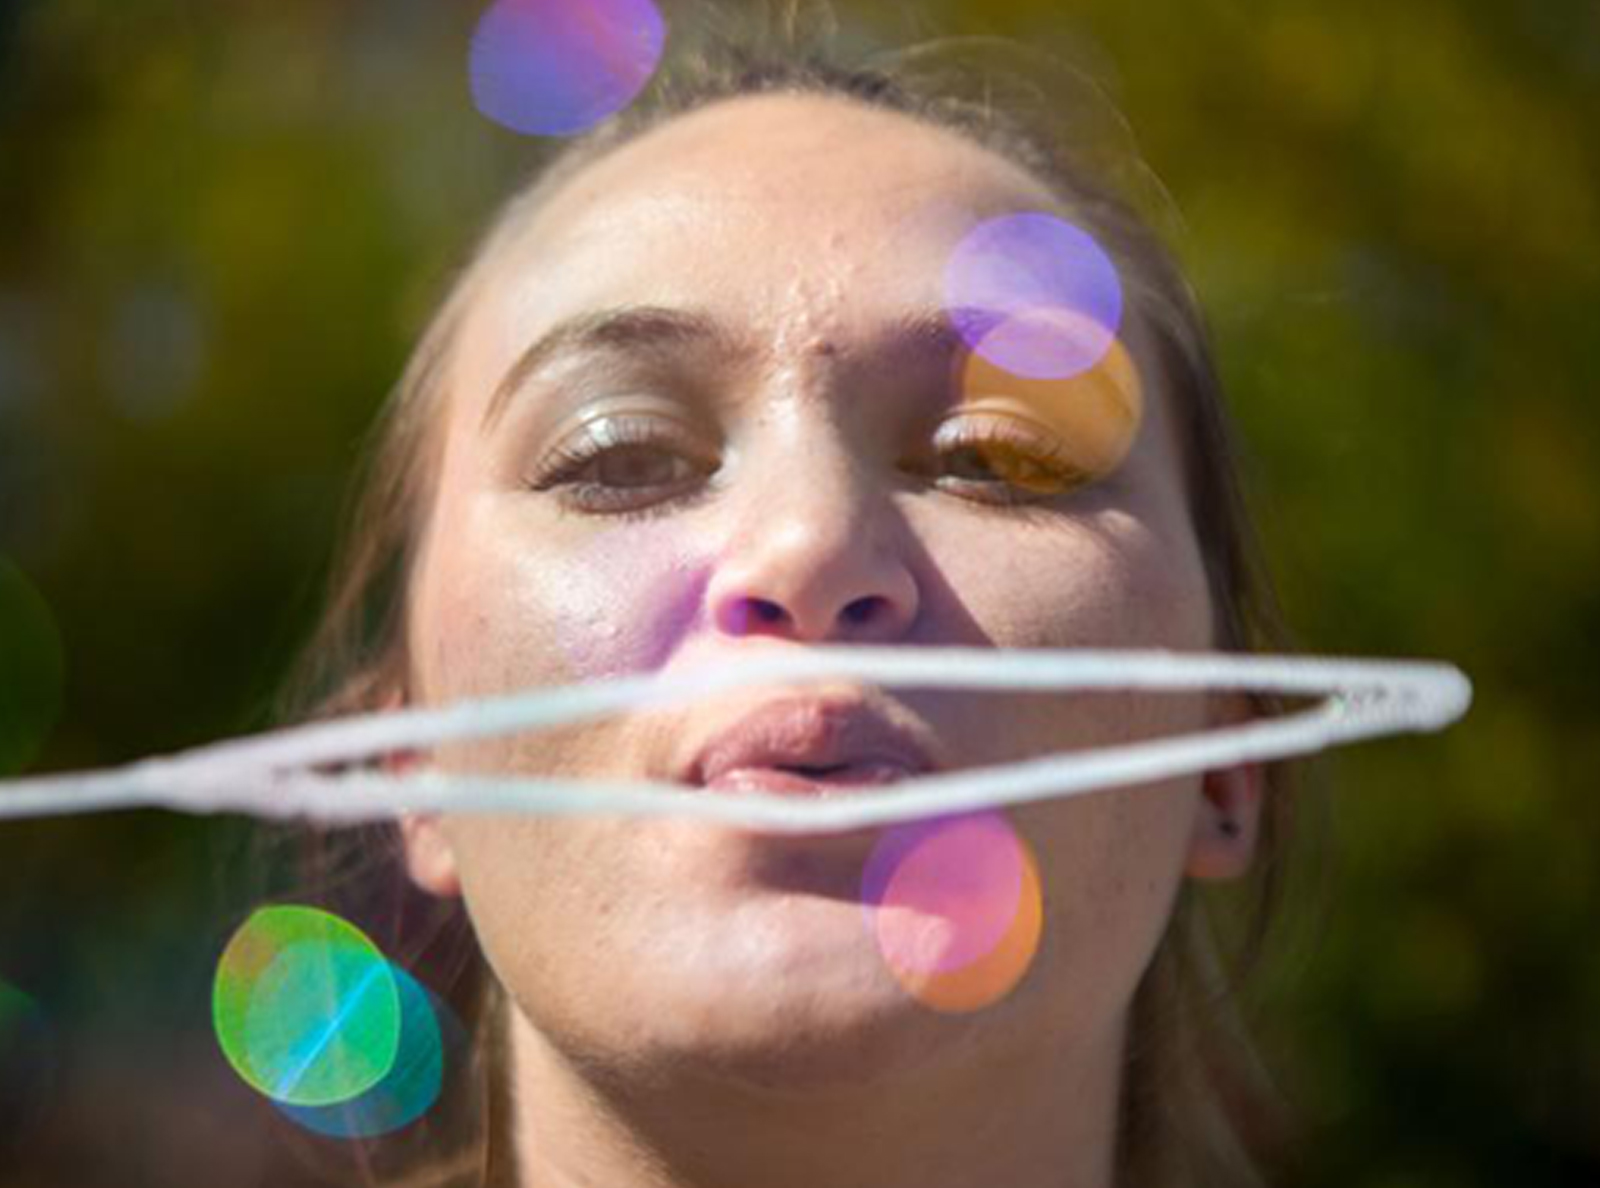 Woman blowing bubbles at recess